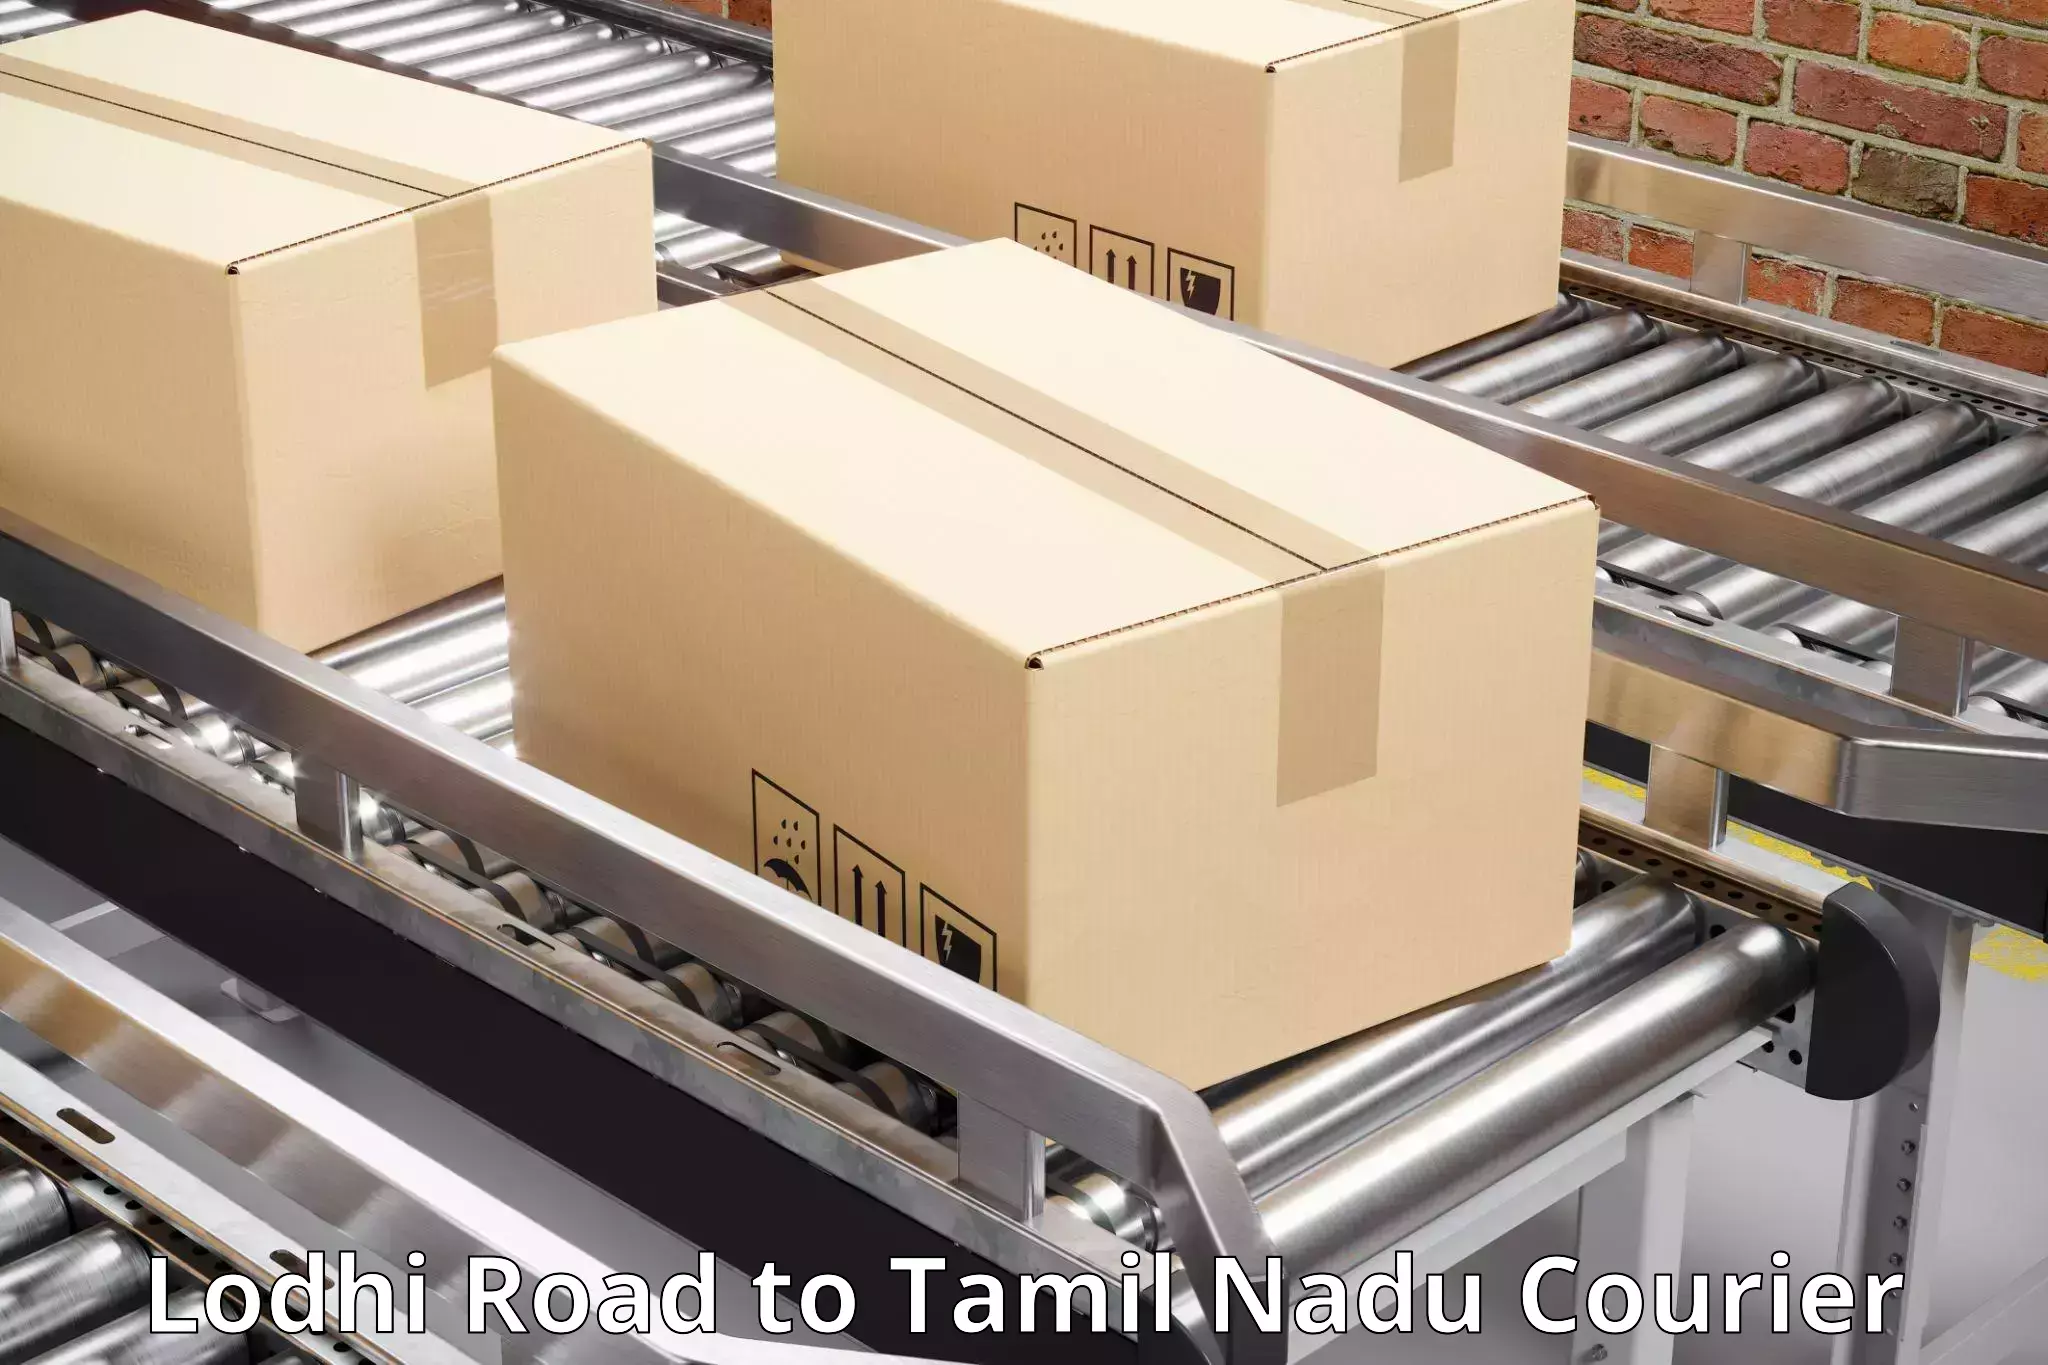 Customer-centric shipping Lodhi Road to Chennai Port